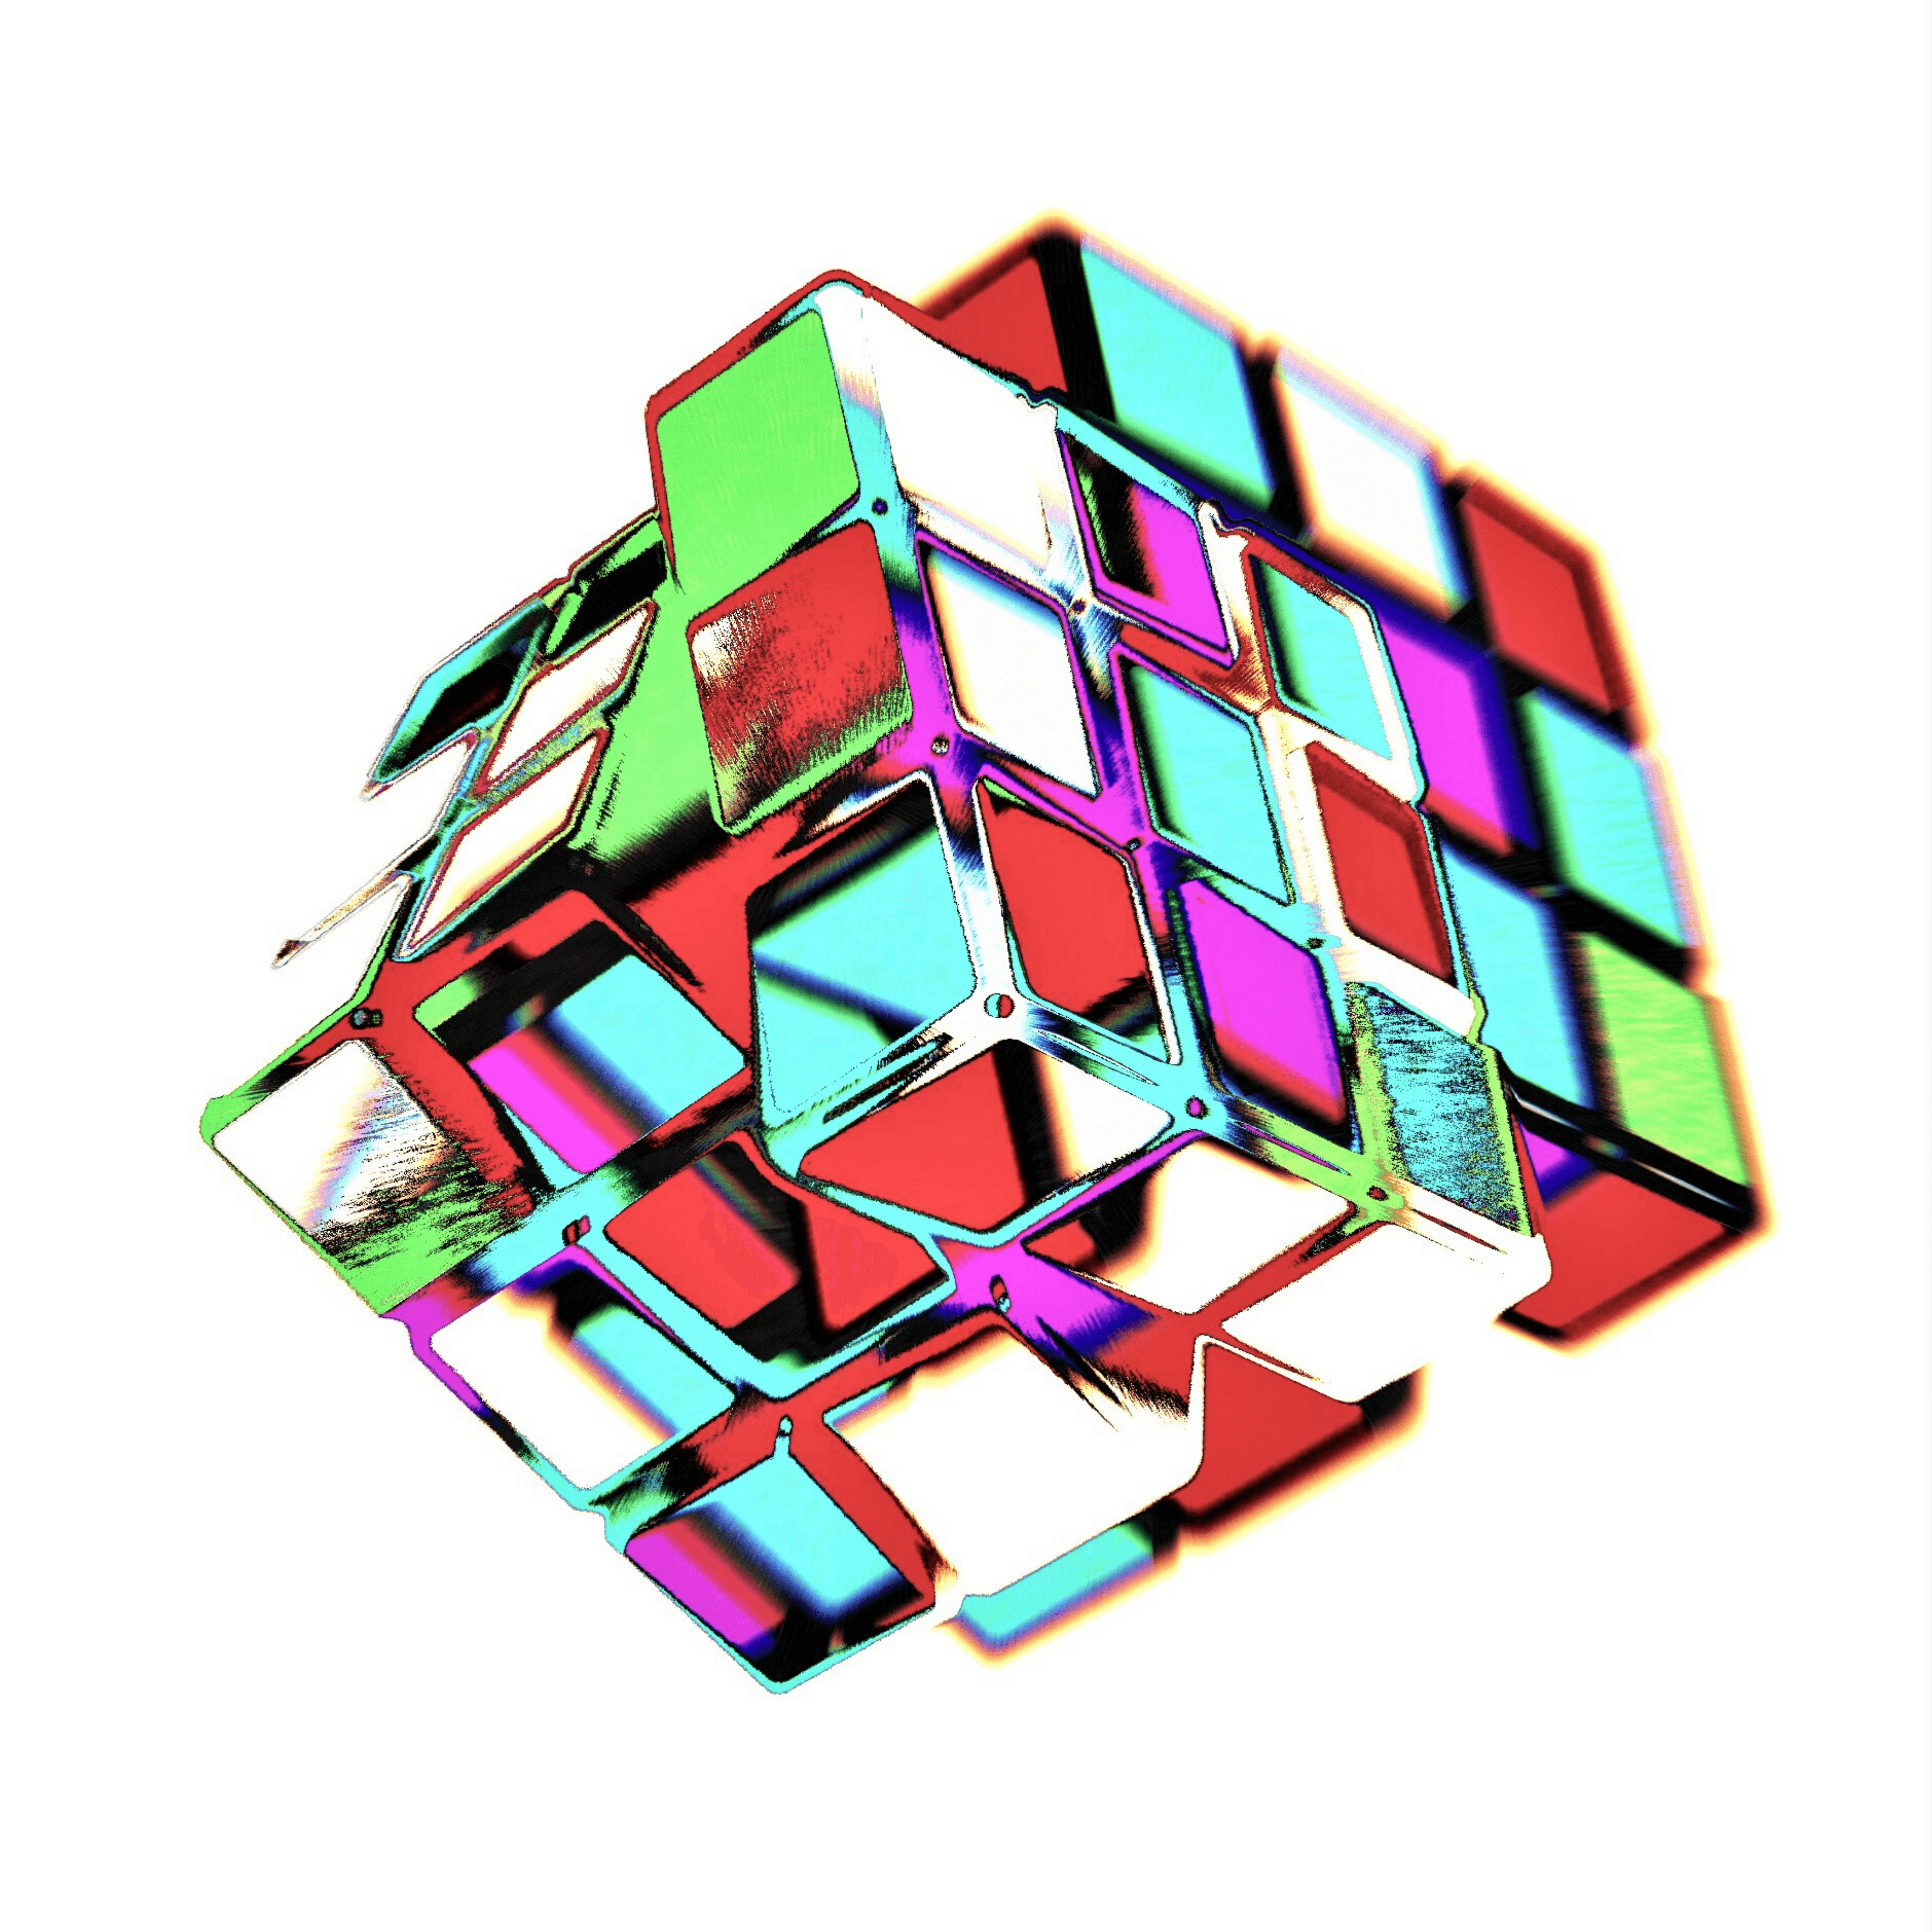 ⏹ TOKEN 184 - Chromatic Cube #7